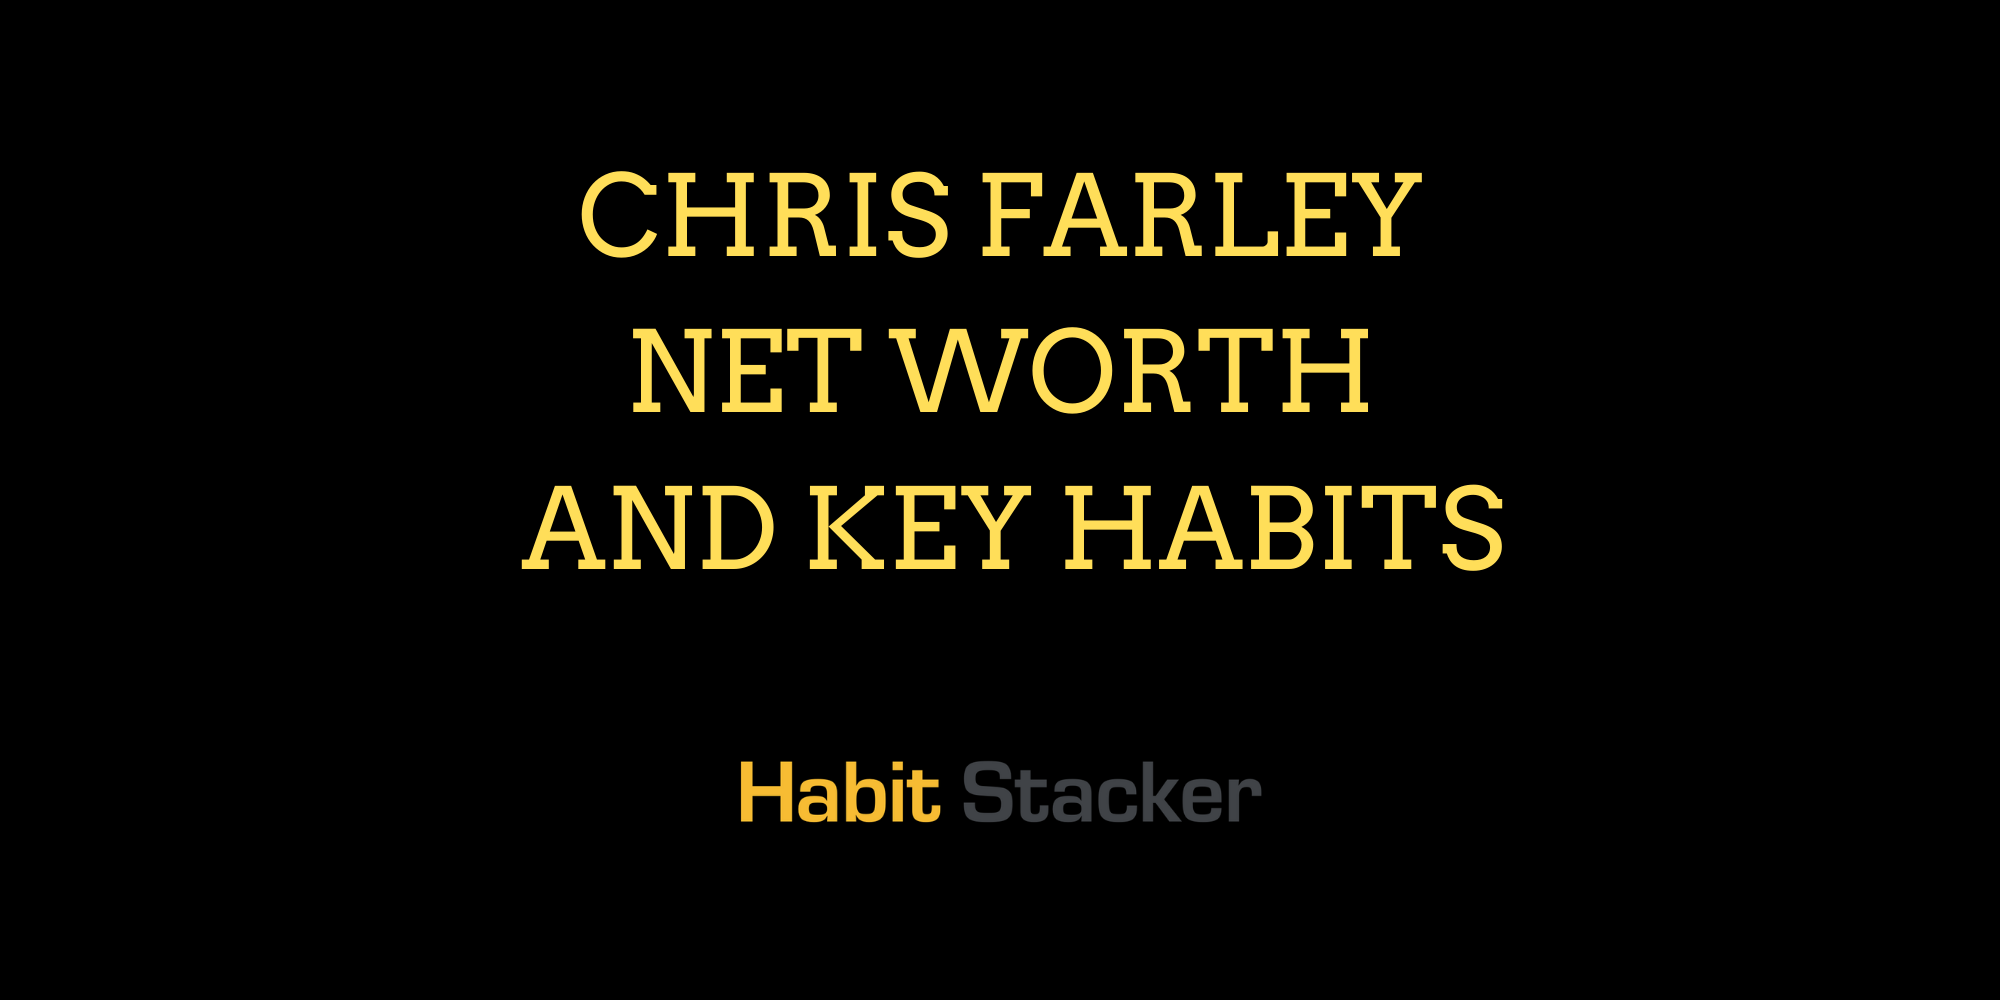 Chris Farley Net Worth and Key Habits